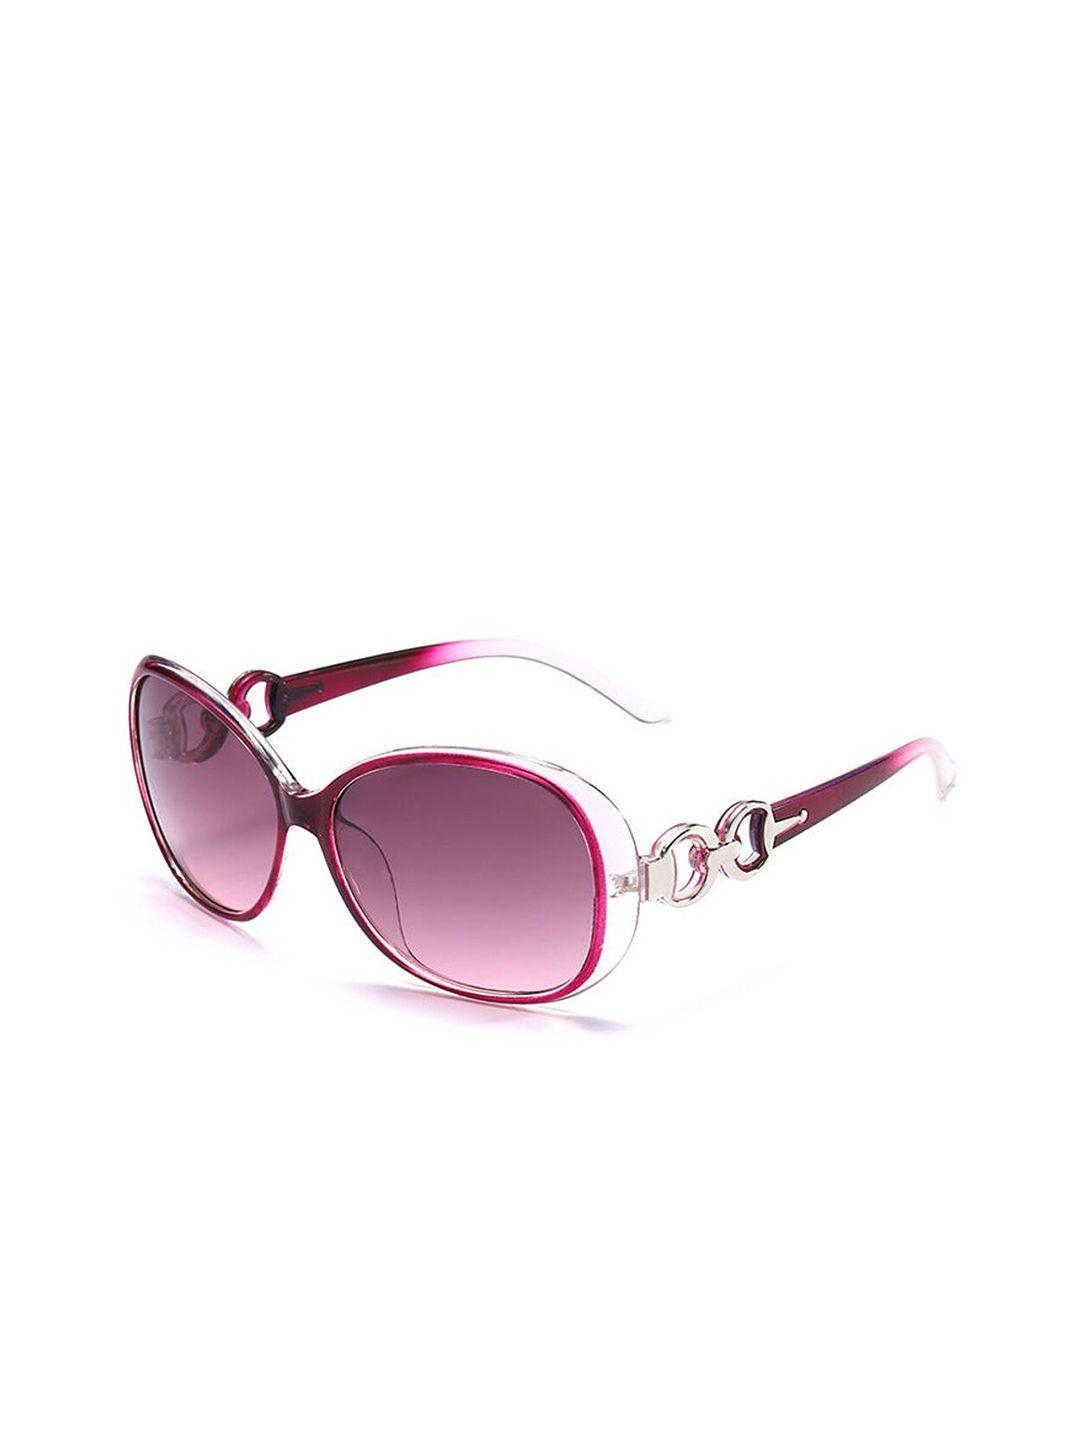 SYGA Women Oversized Sunglasses with UV Protected Lens GL-224